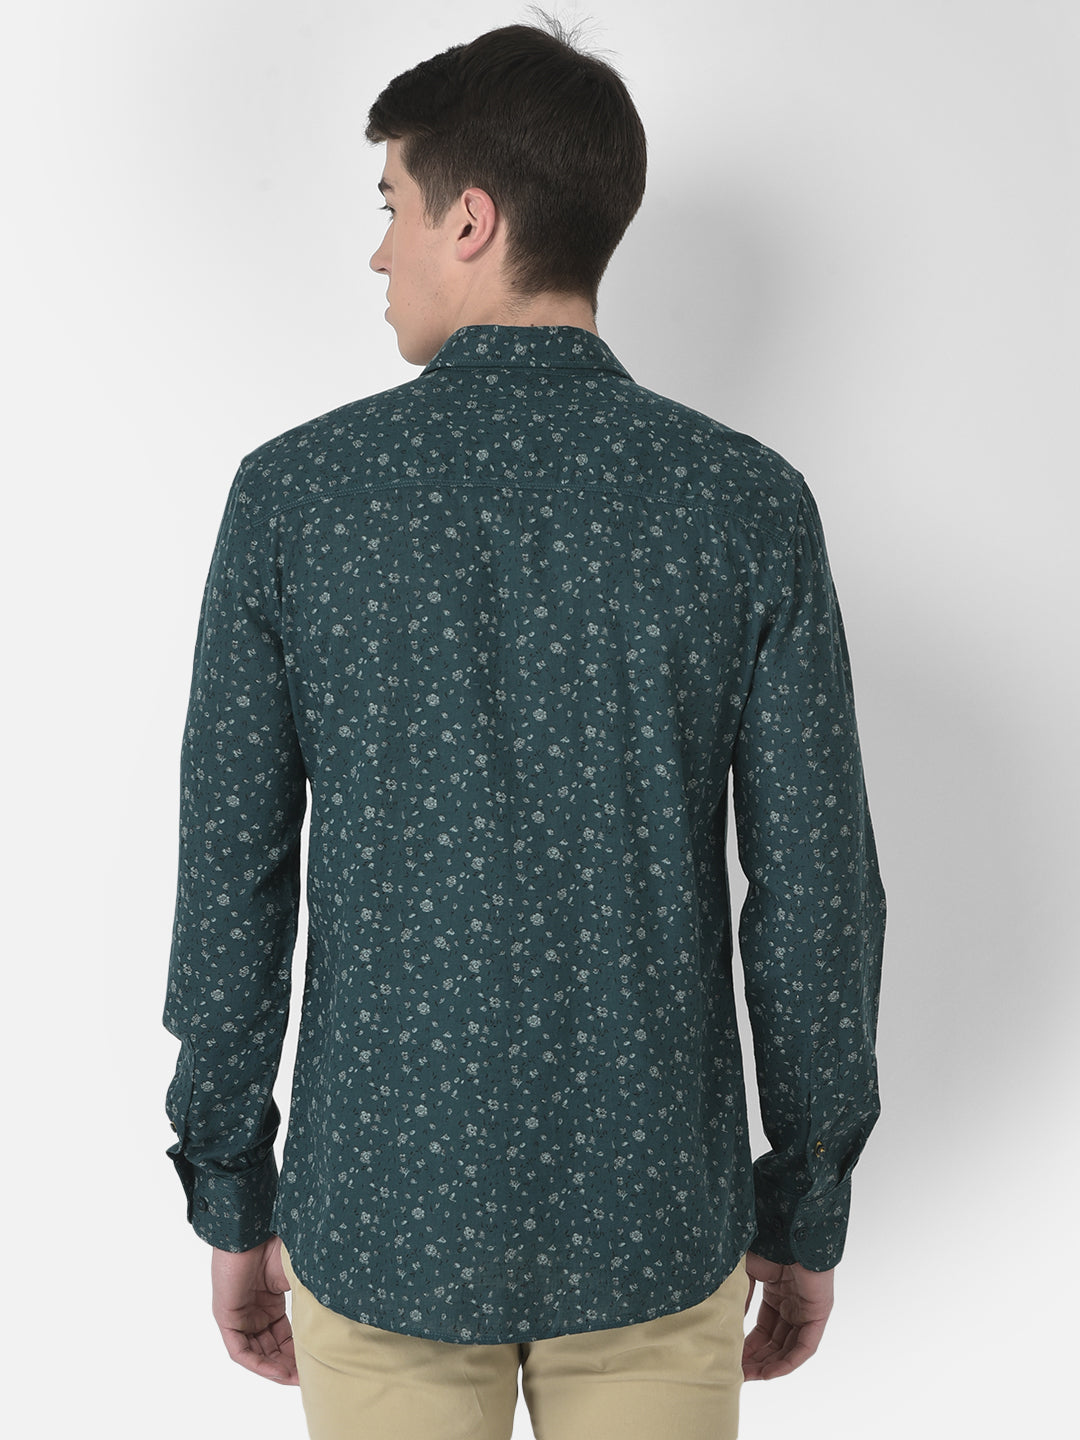  Green Floral Print Shirt 